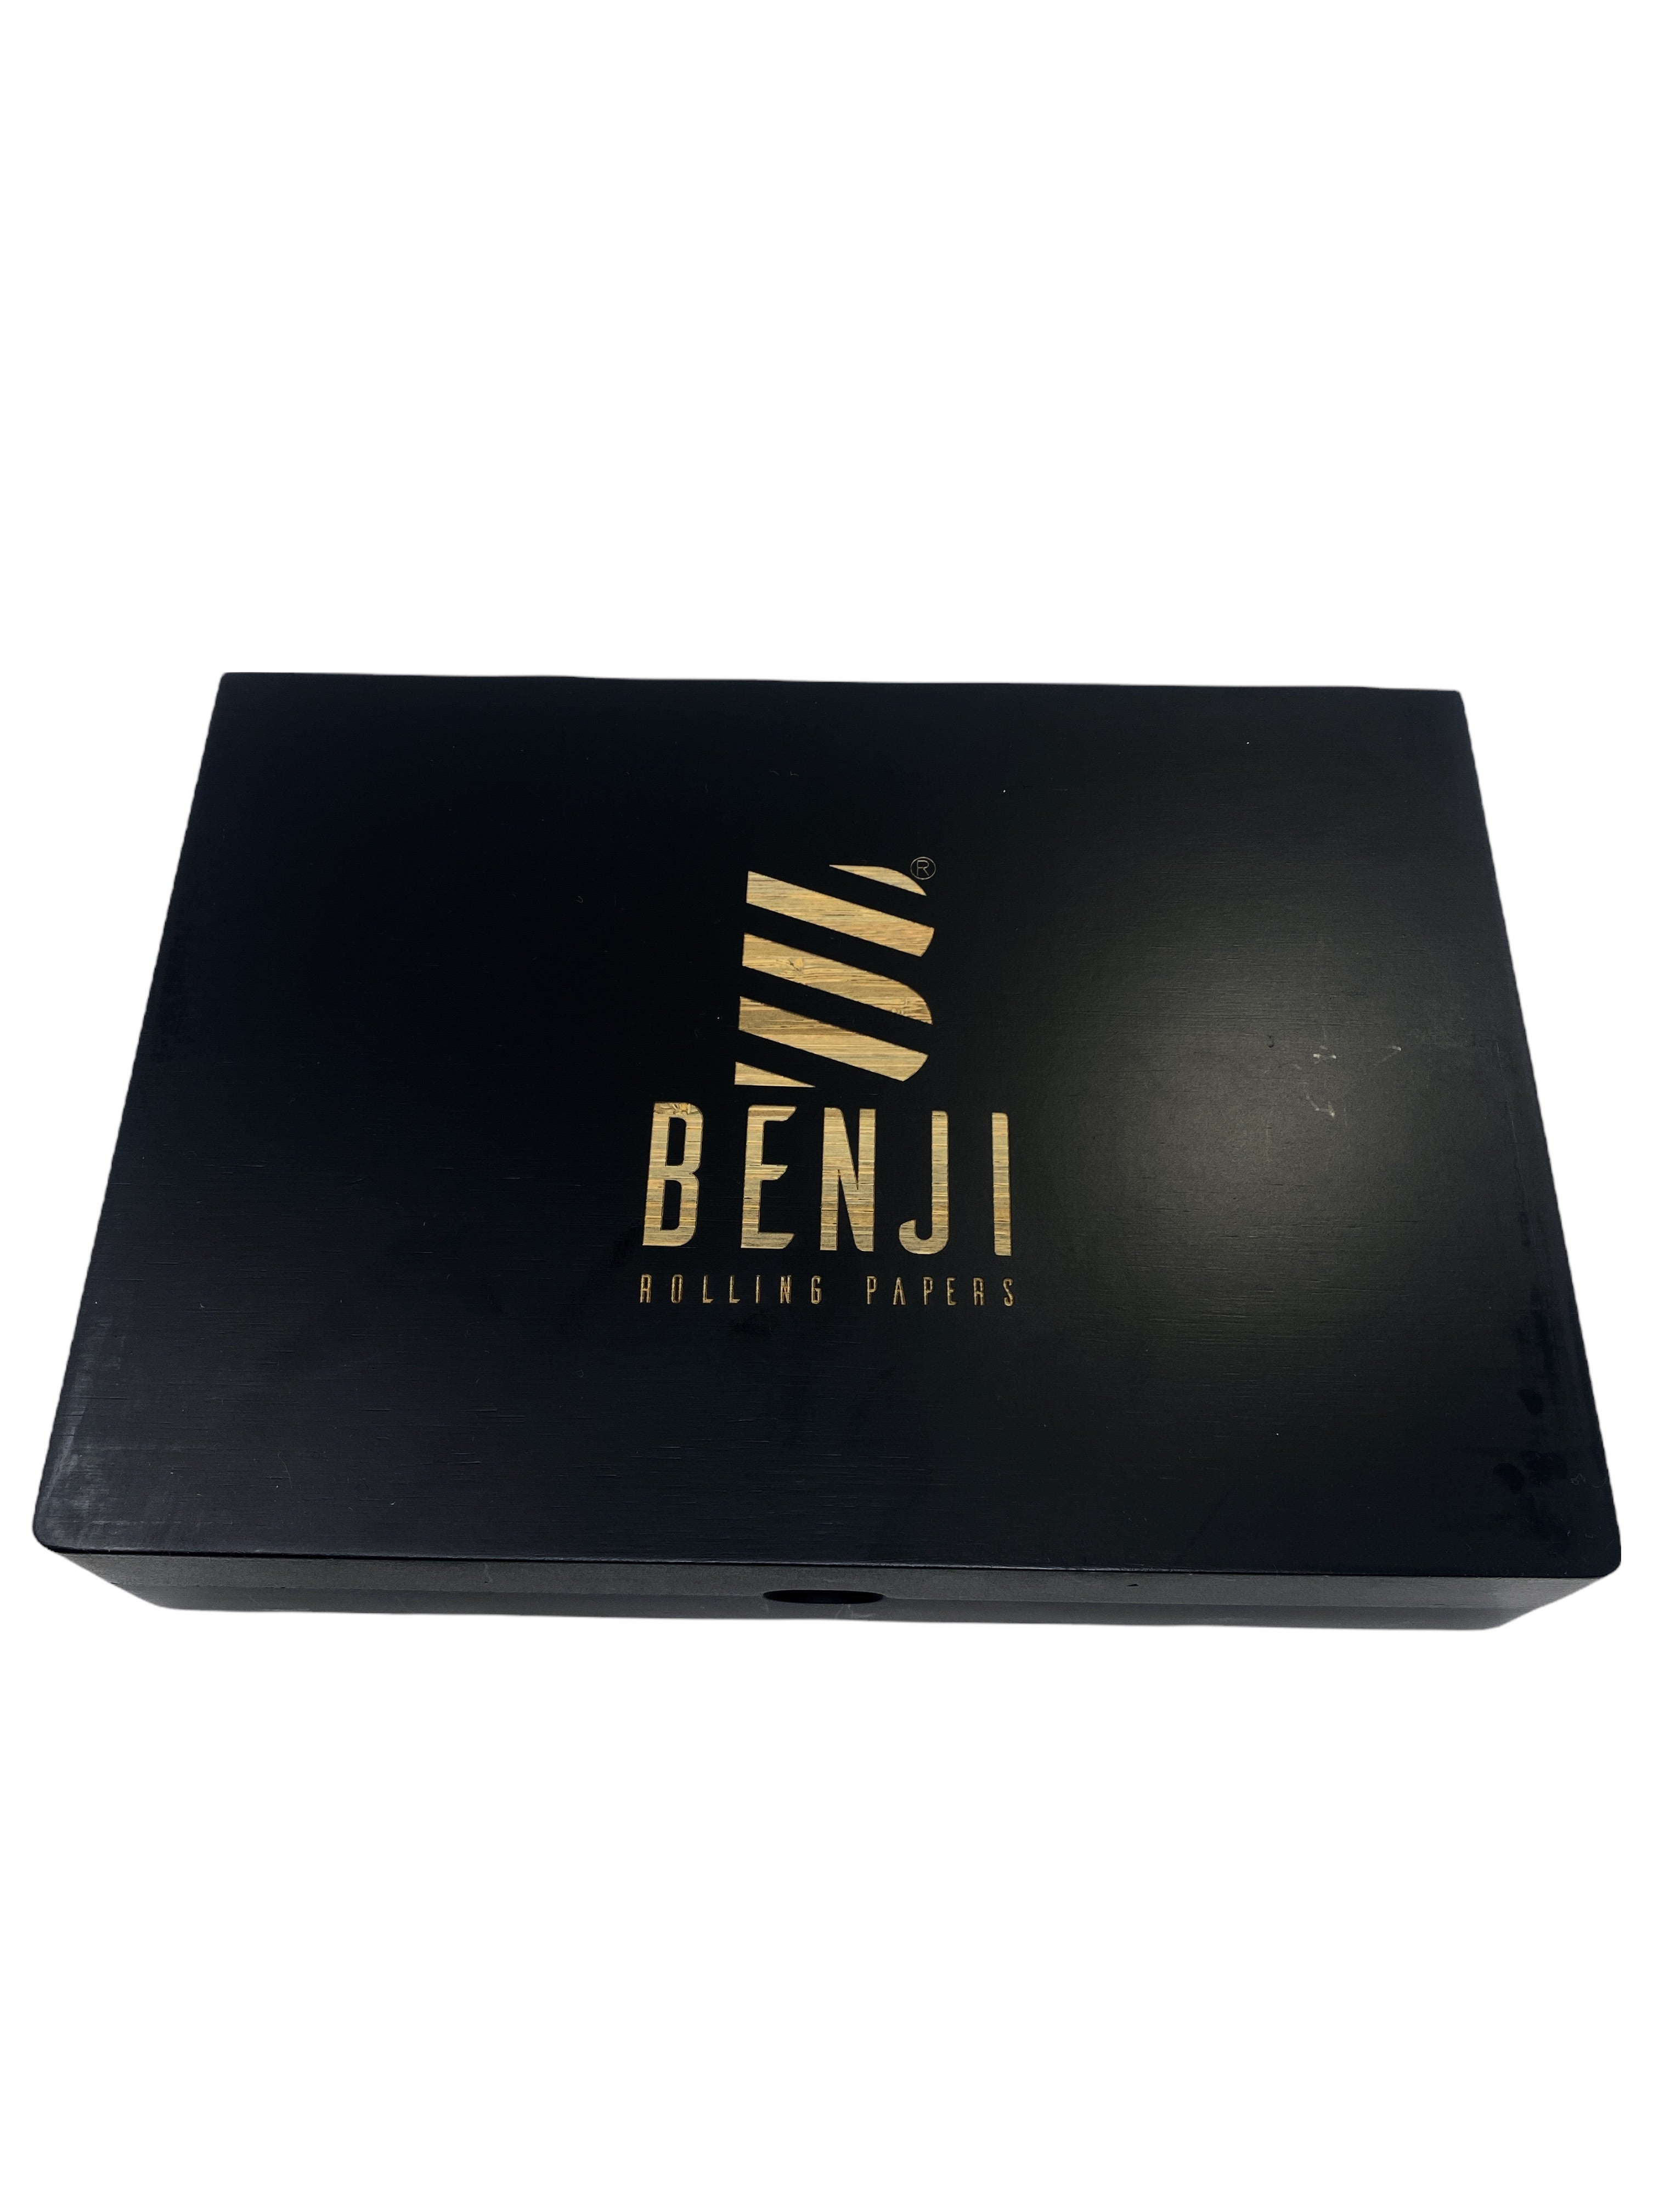 Benji Bankroll Bamboo Tray Kit —